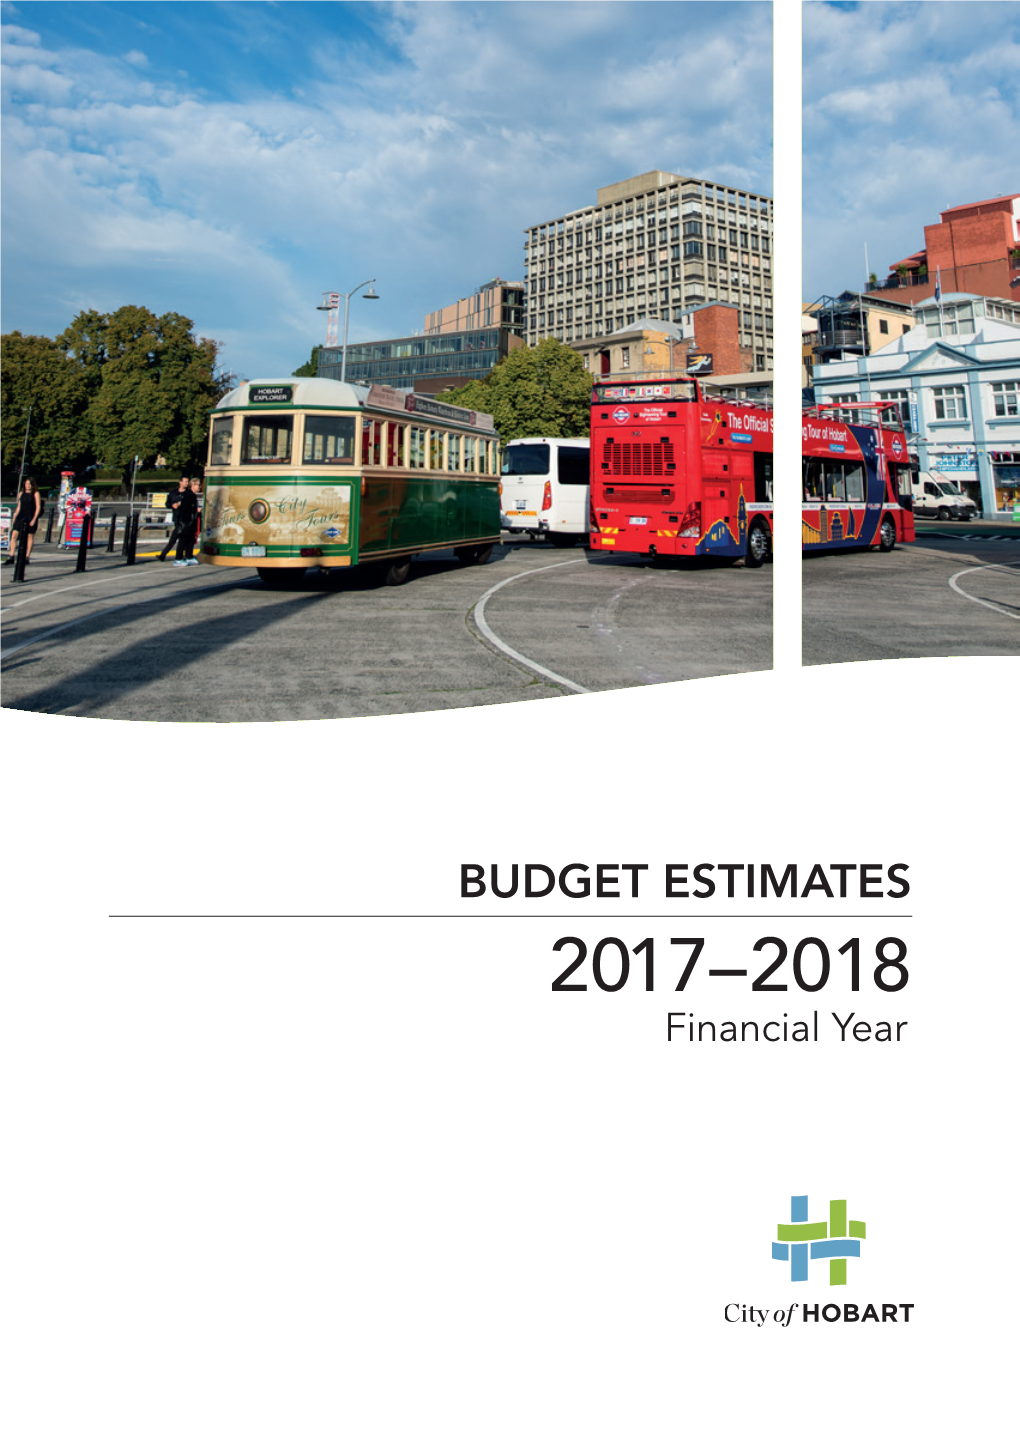 Attachment City of Hobart, Budget Estimates